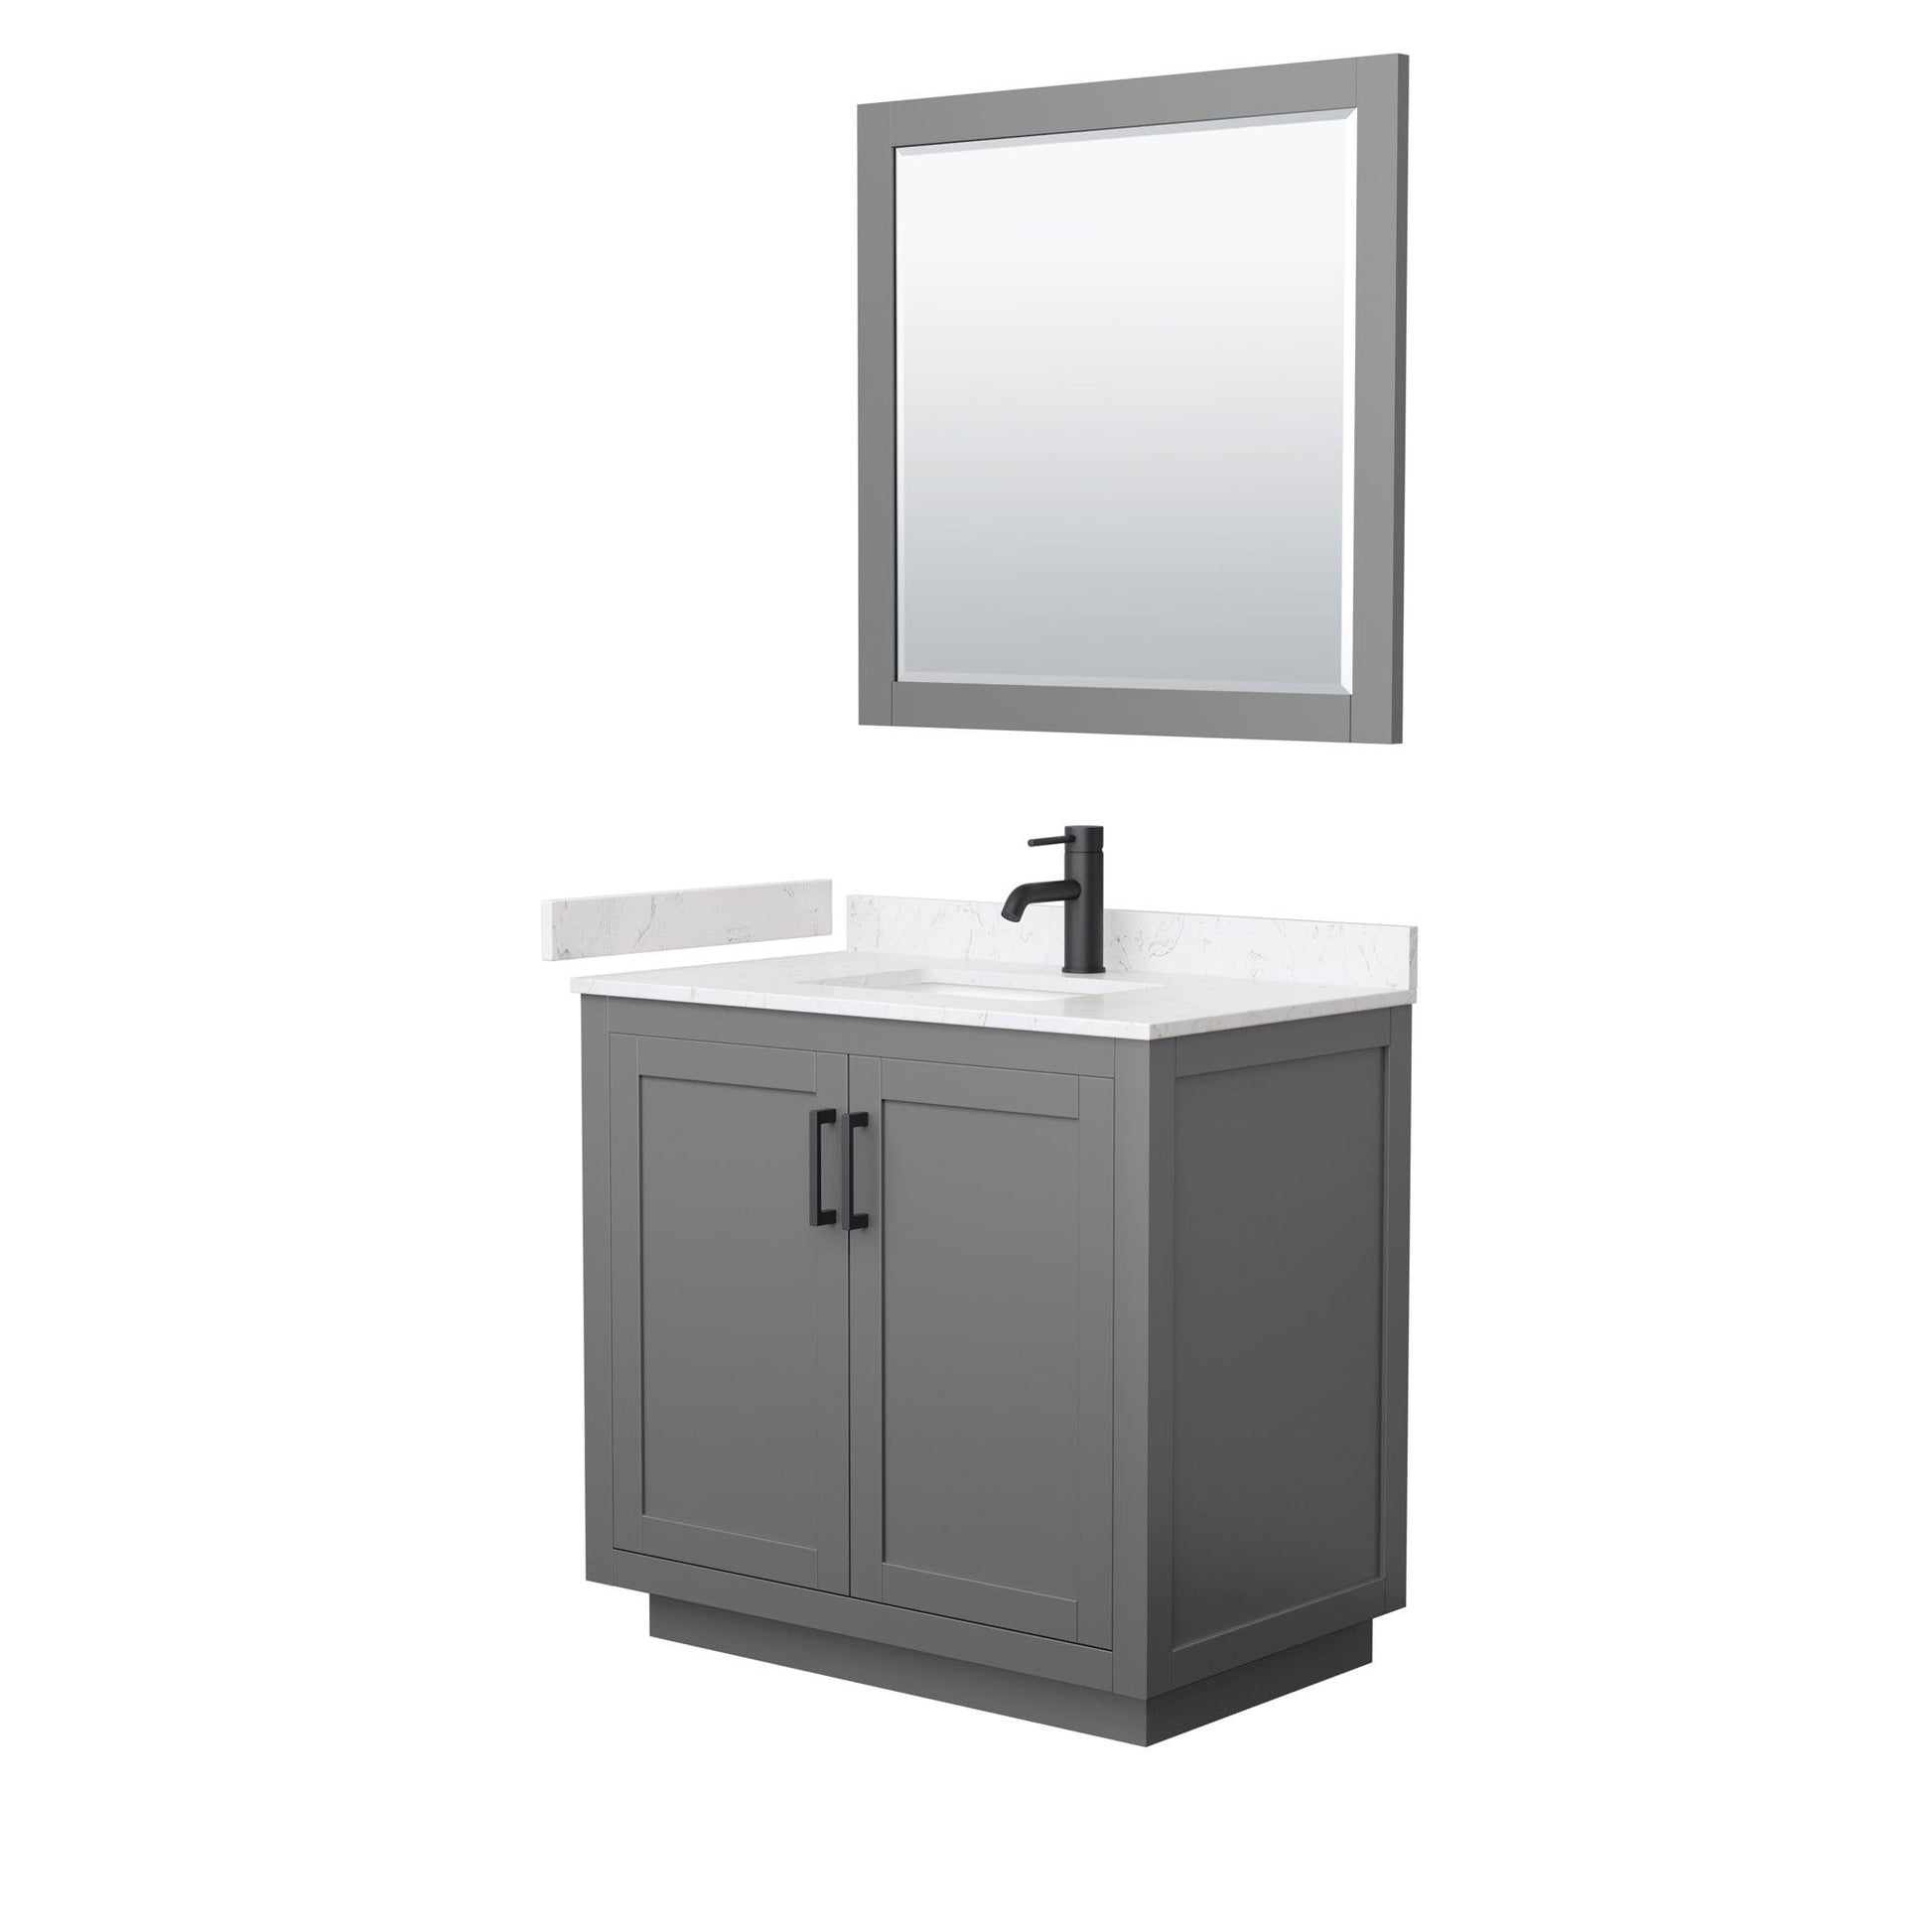 
  
  Wyndham Collection Miranda Single Bathroom Vanity in Dark Gray, Light-Vein Carrara Cultured Marble Countertop, Undermount Square Sink, Complementary Trim, Optional Mirror
  
